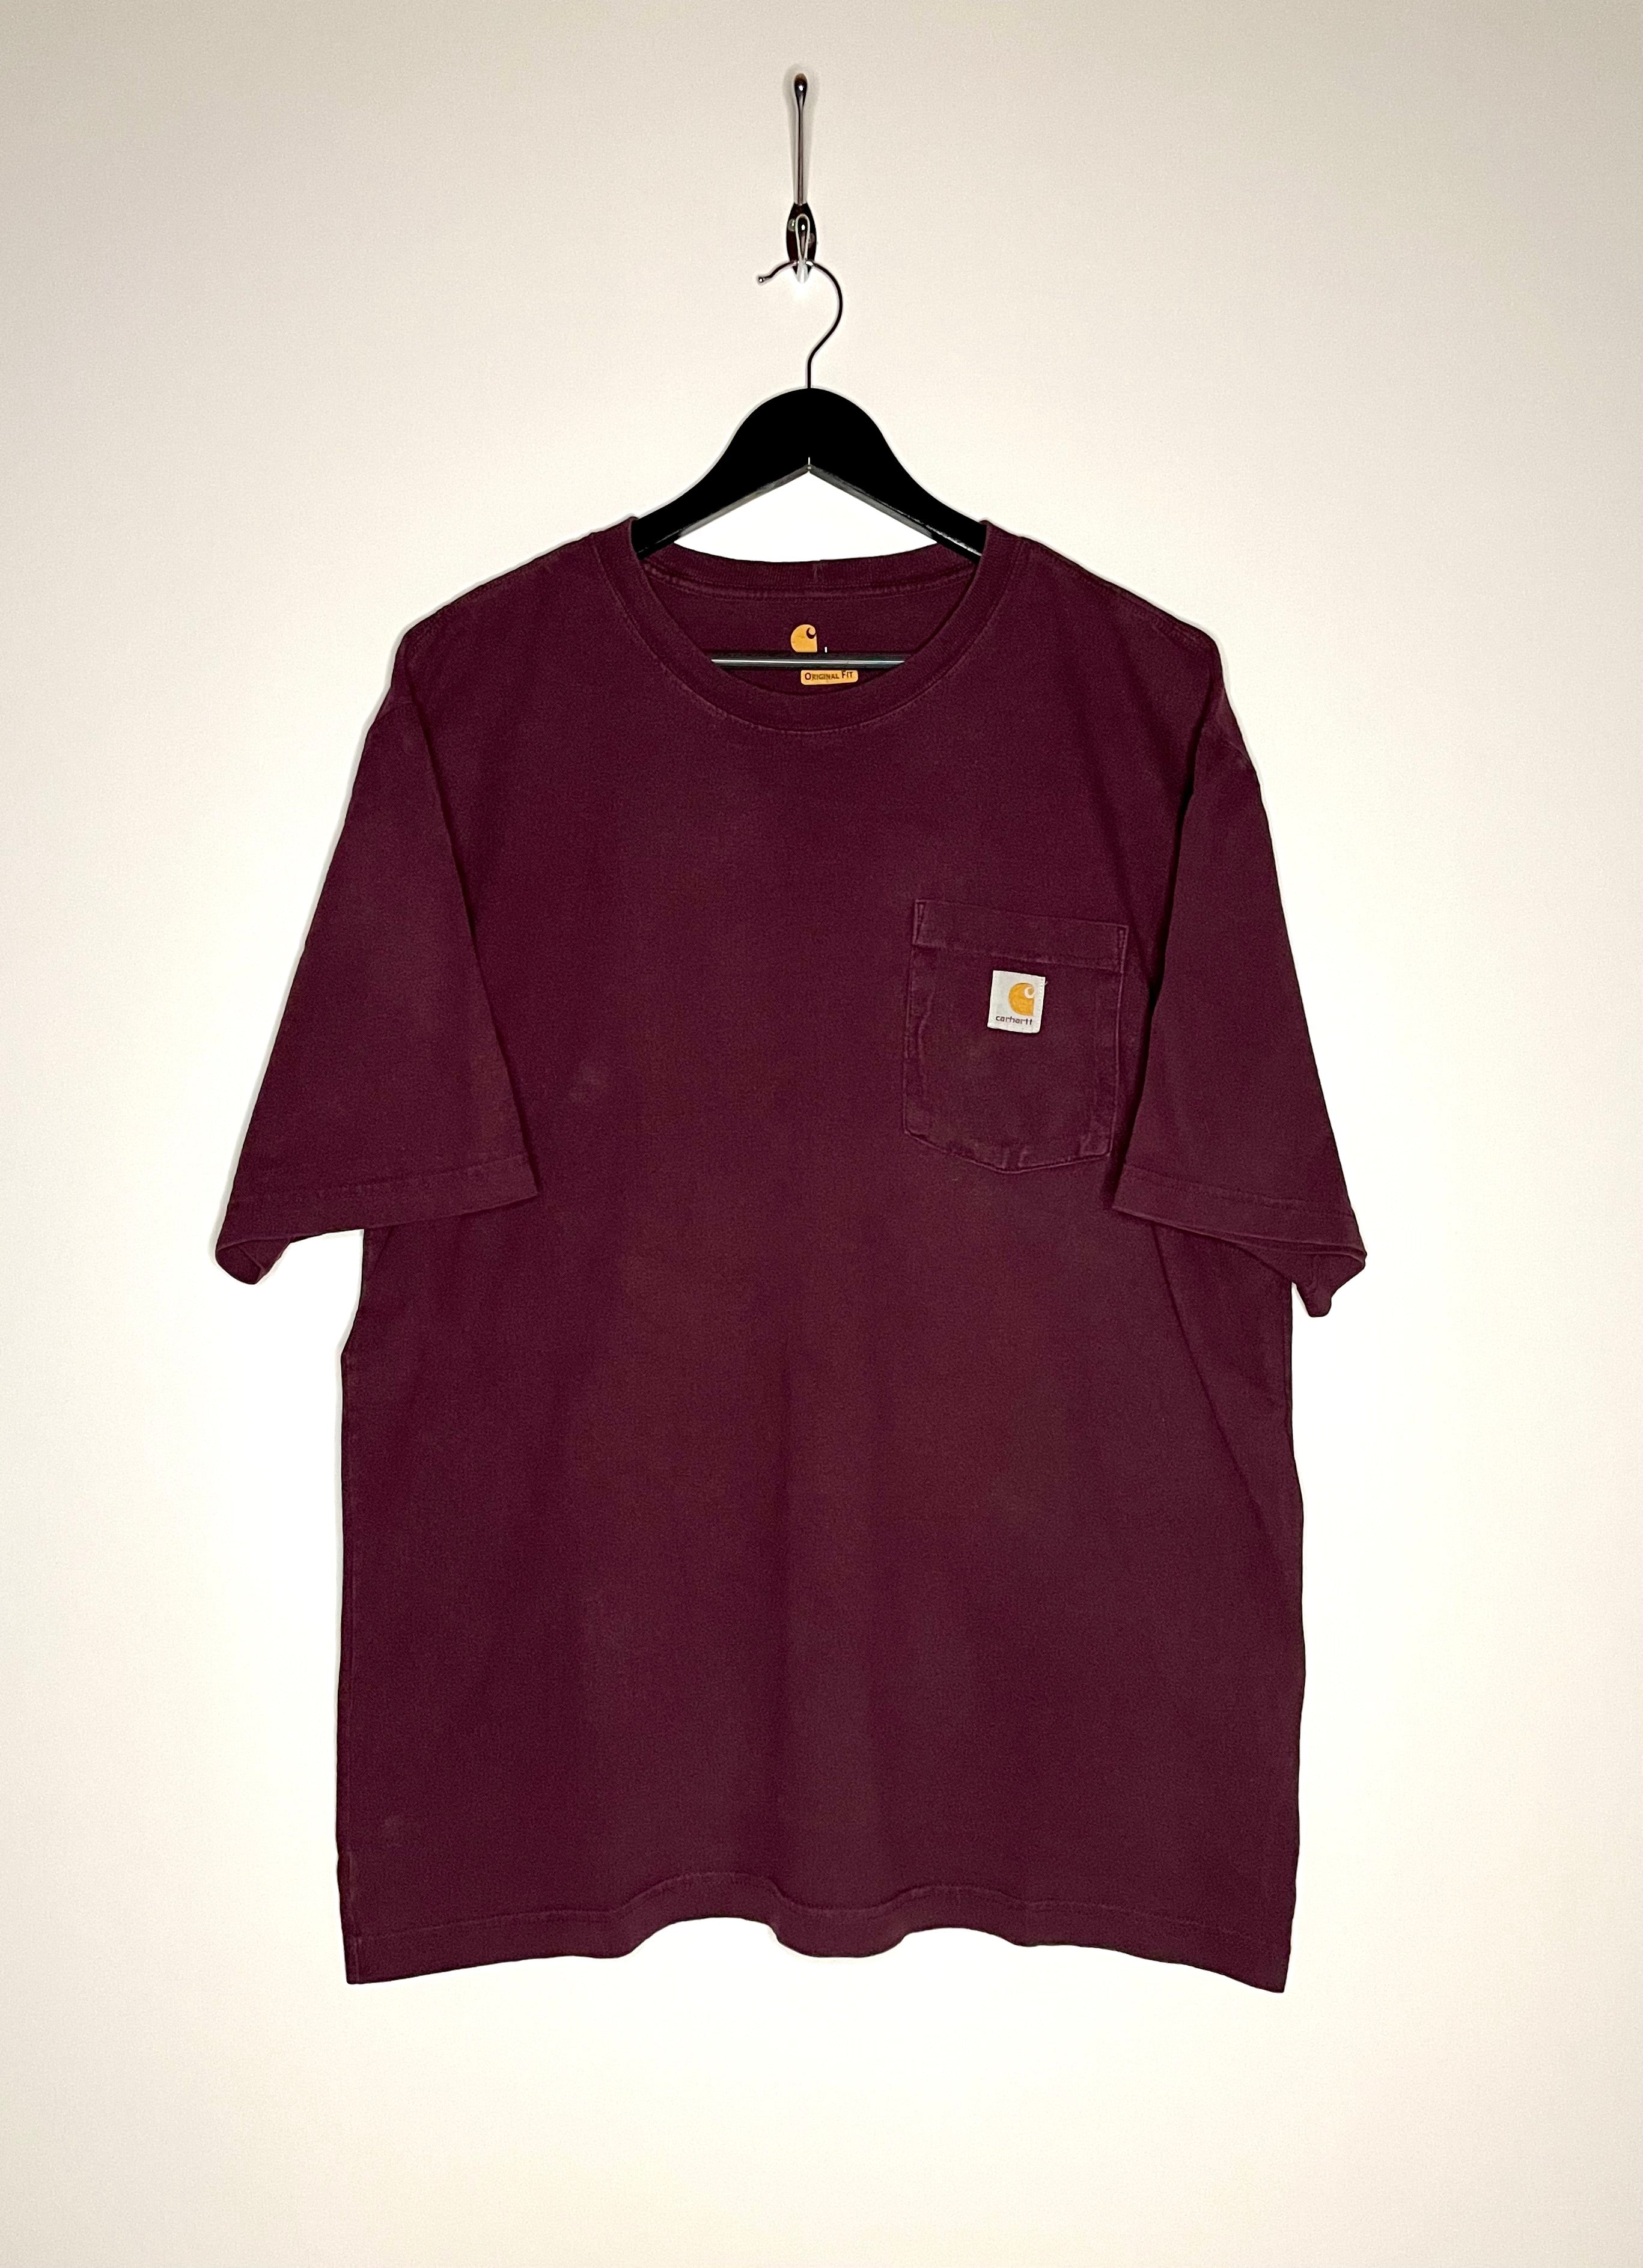 Carhartt T-Shirt Original Fit Rot Größe L